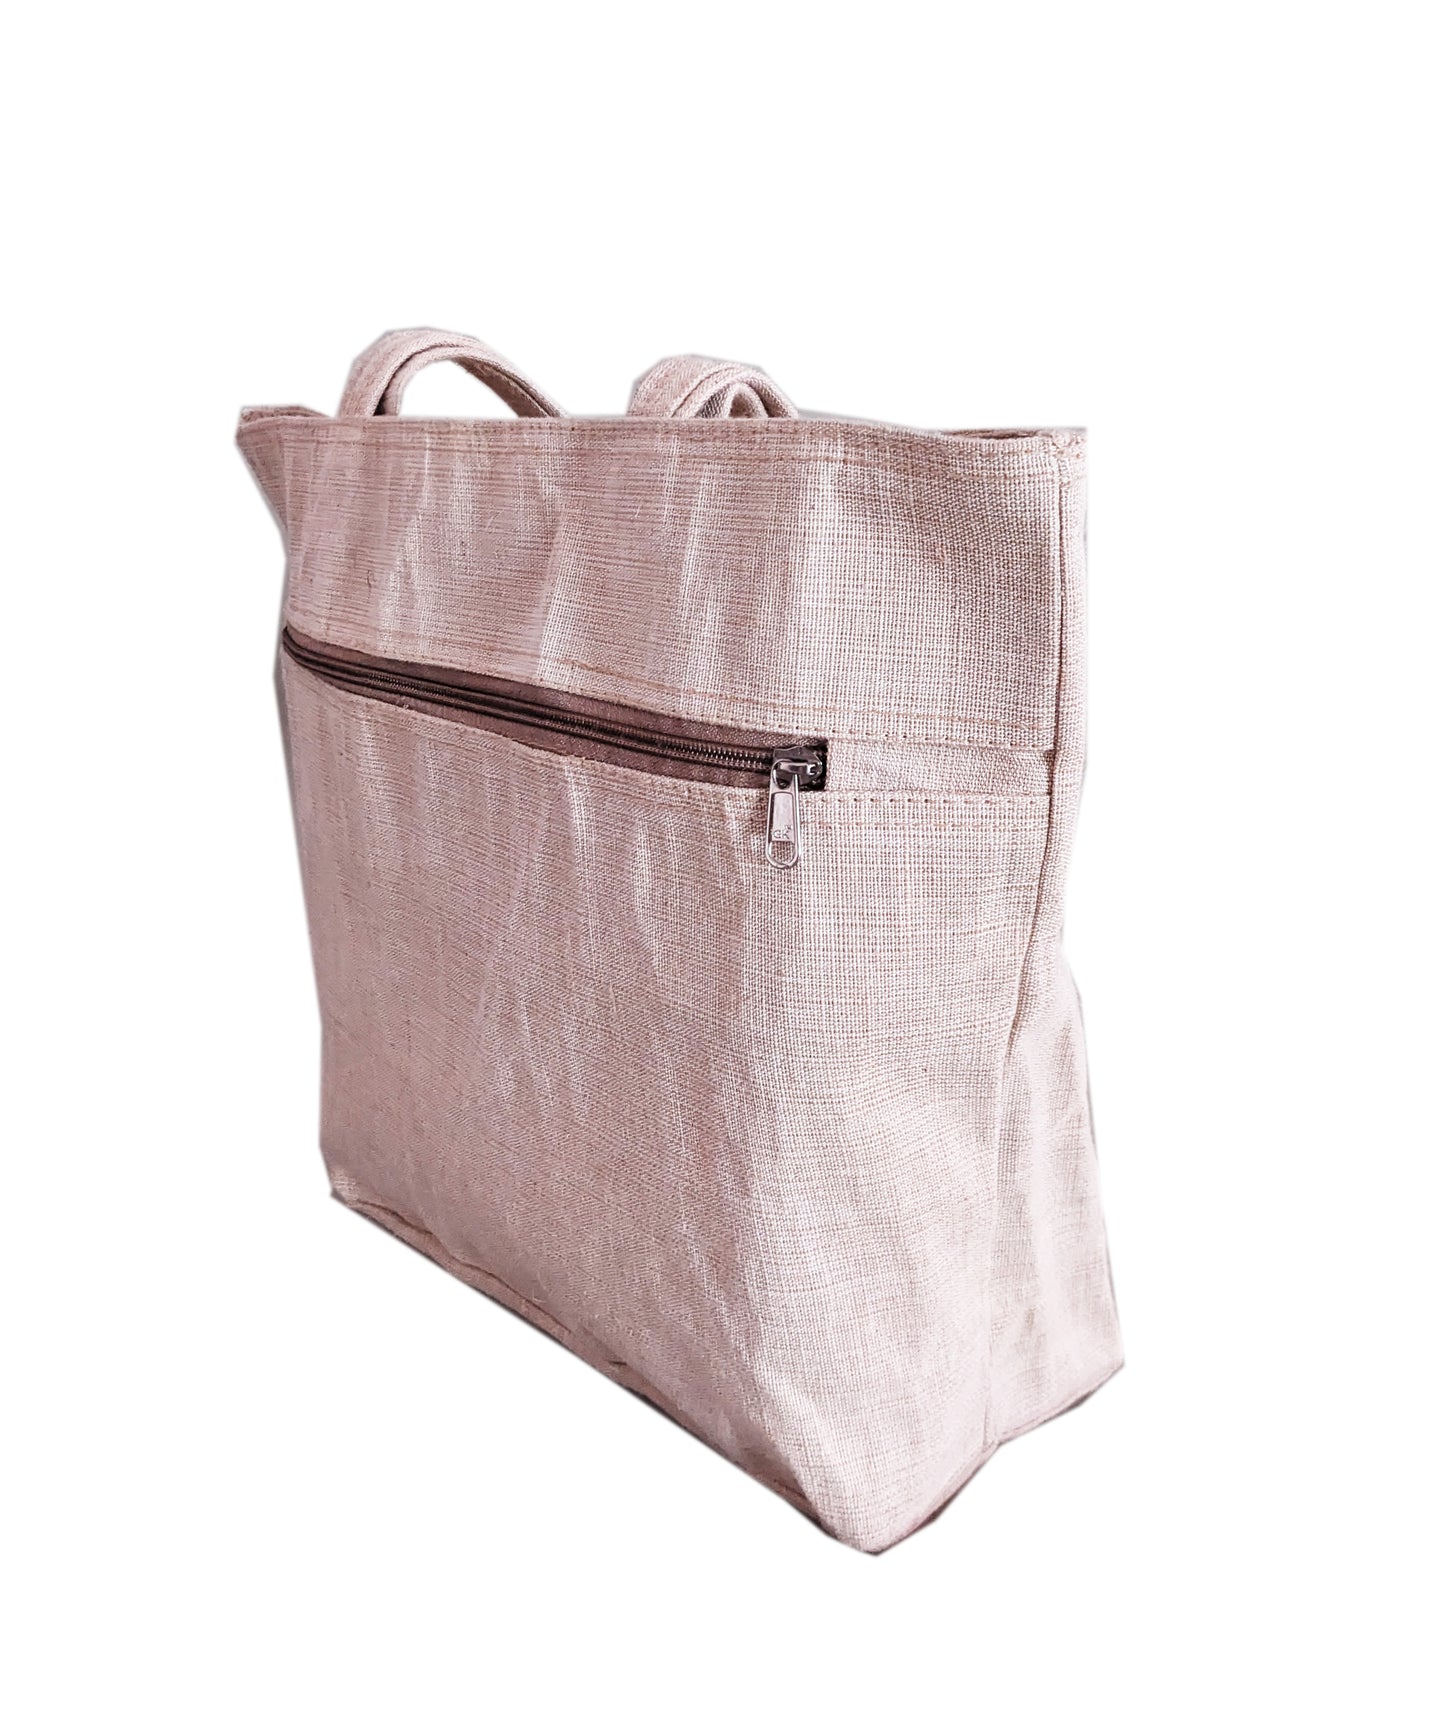 Handmakers Natural Juco Tote Bags for Women's Shopping | Women Handbags